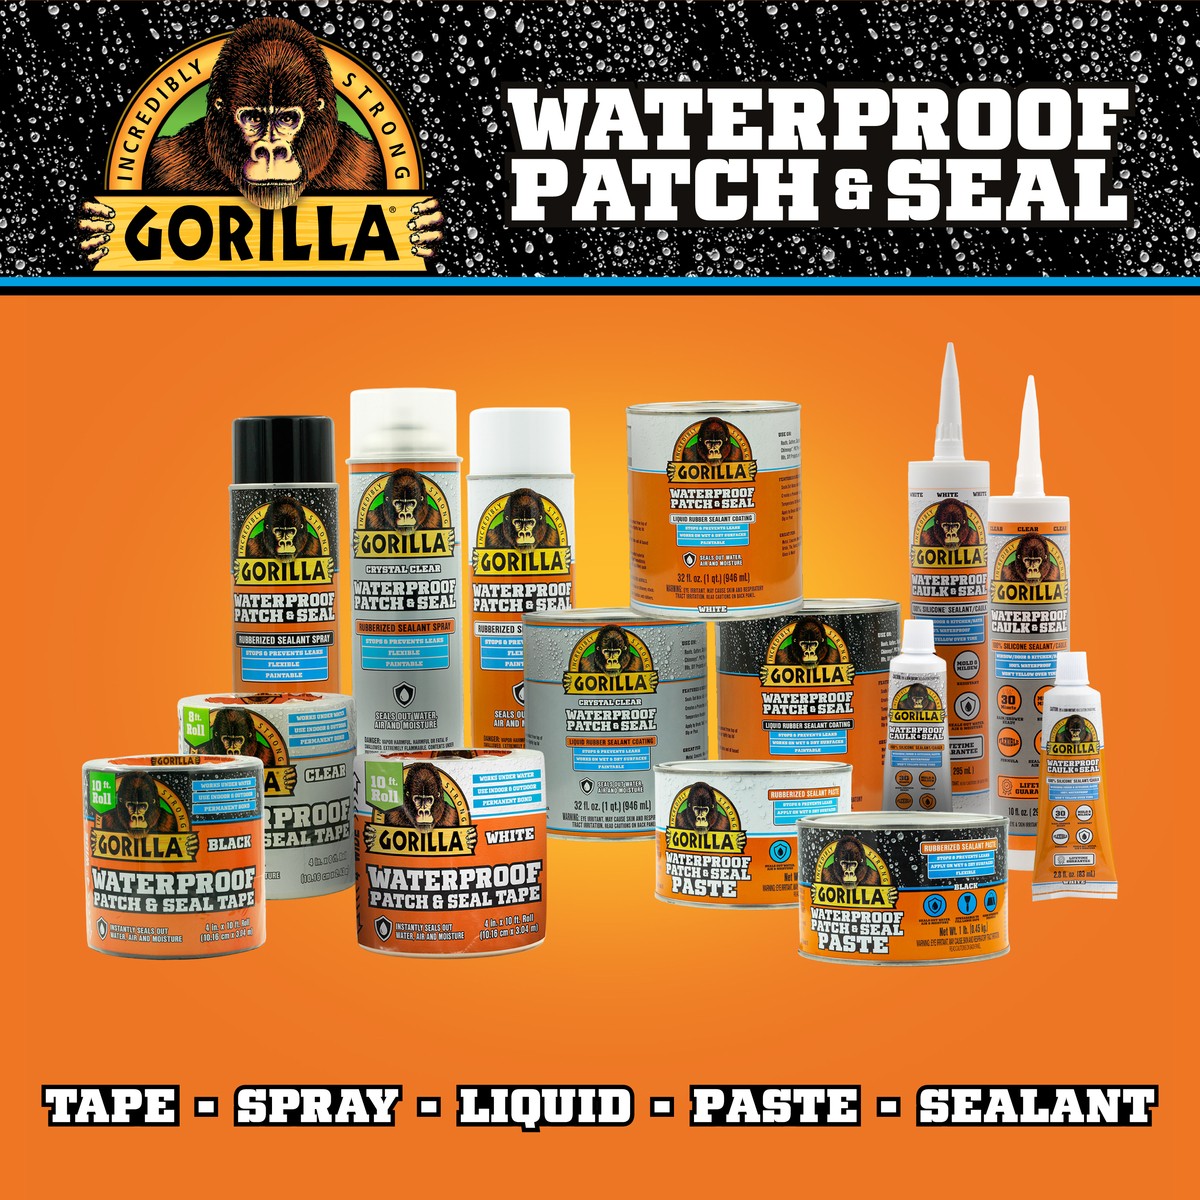  Gorilla Waterproof Patch & Seal Tape 4 x 10' White